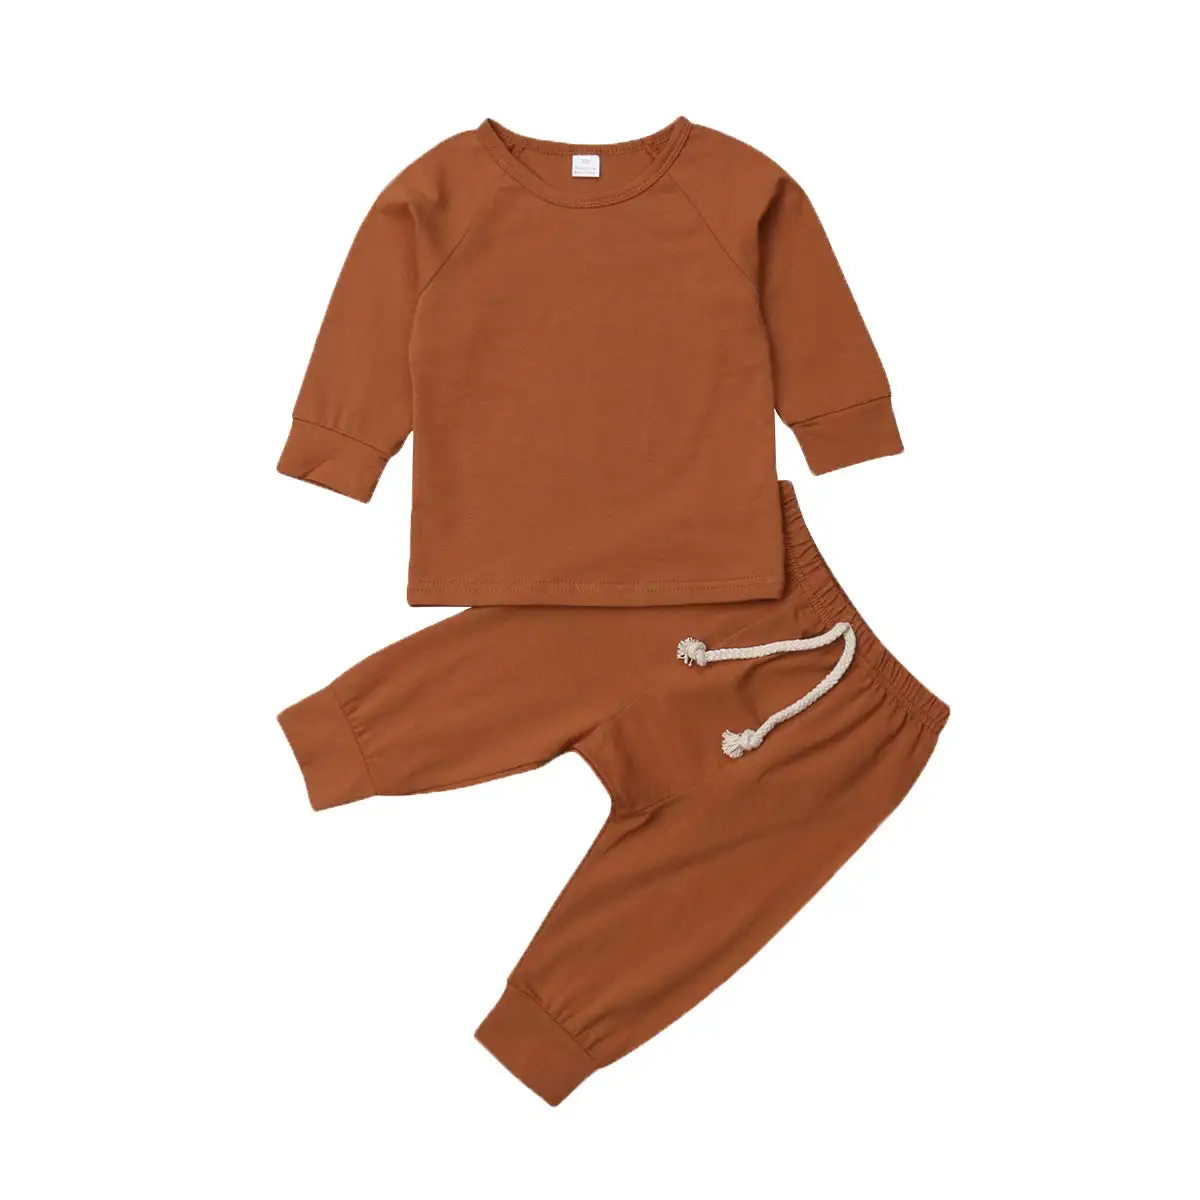 Copil nou-născut Seturi de Pijamale baietel Fete Haine seturi Solid Topuri Lungi + Pantaloni Costume Sleepwear Haine 0-24M